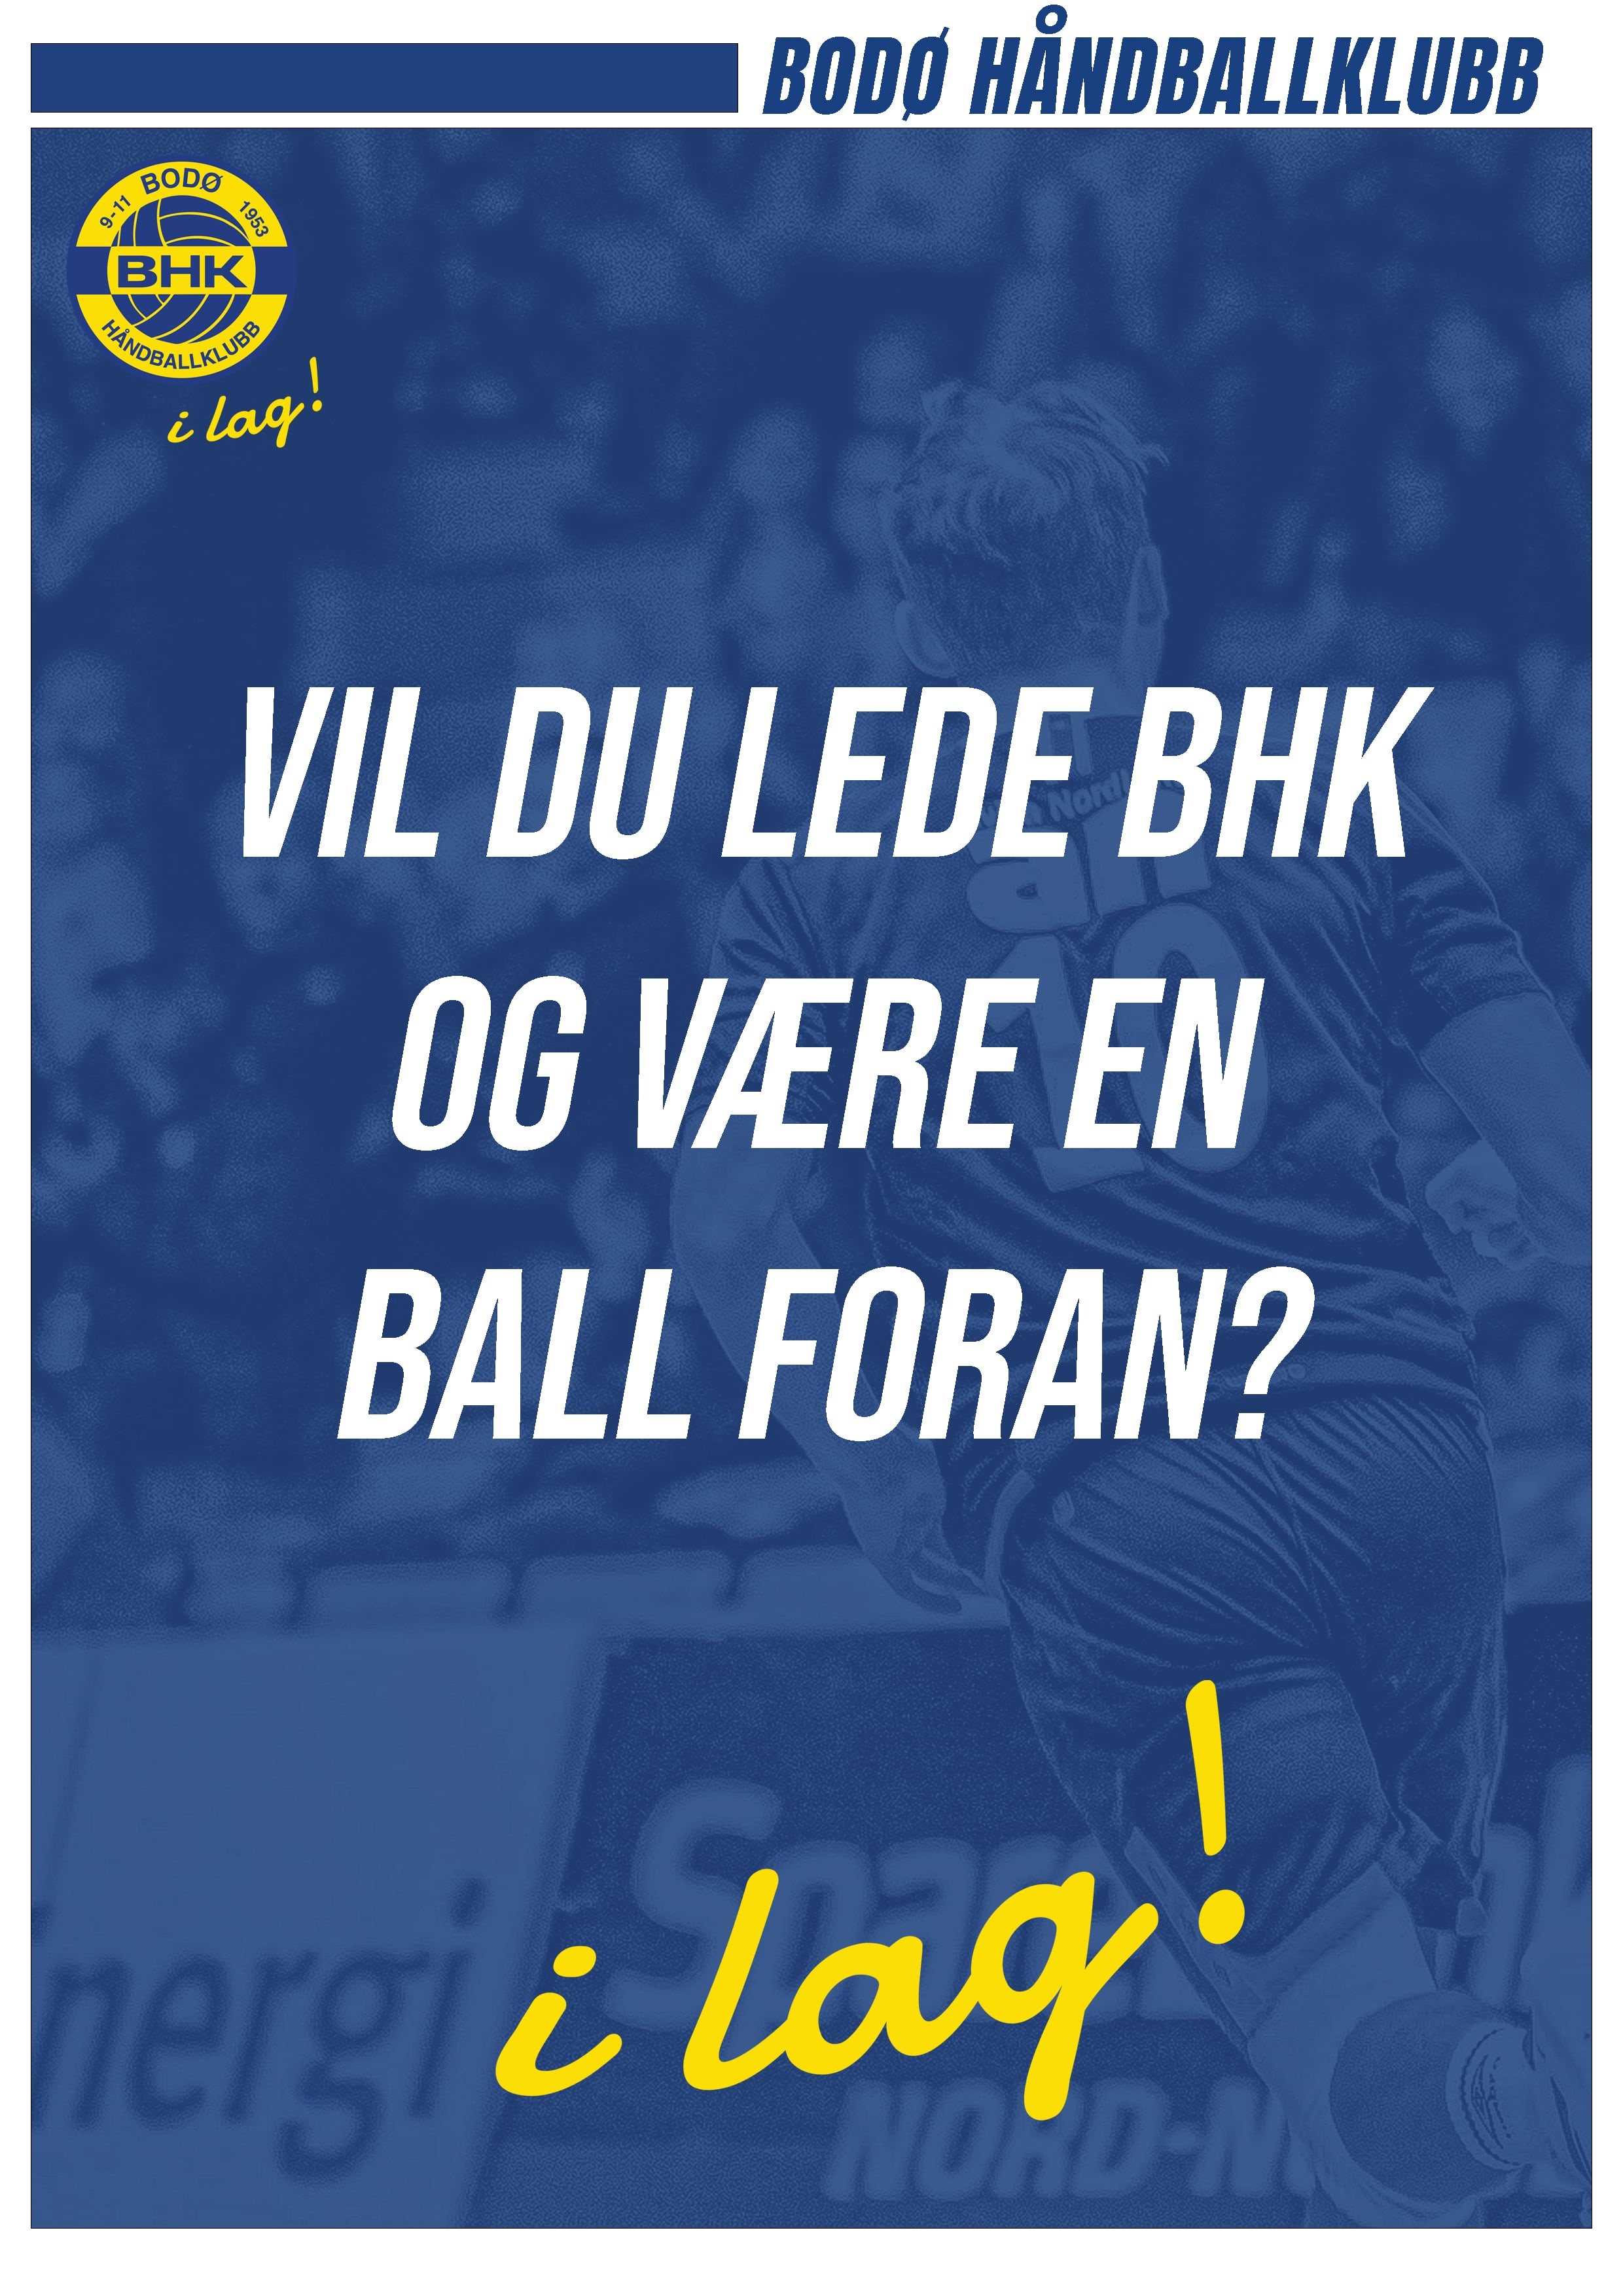 Bodø Håndballklubb